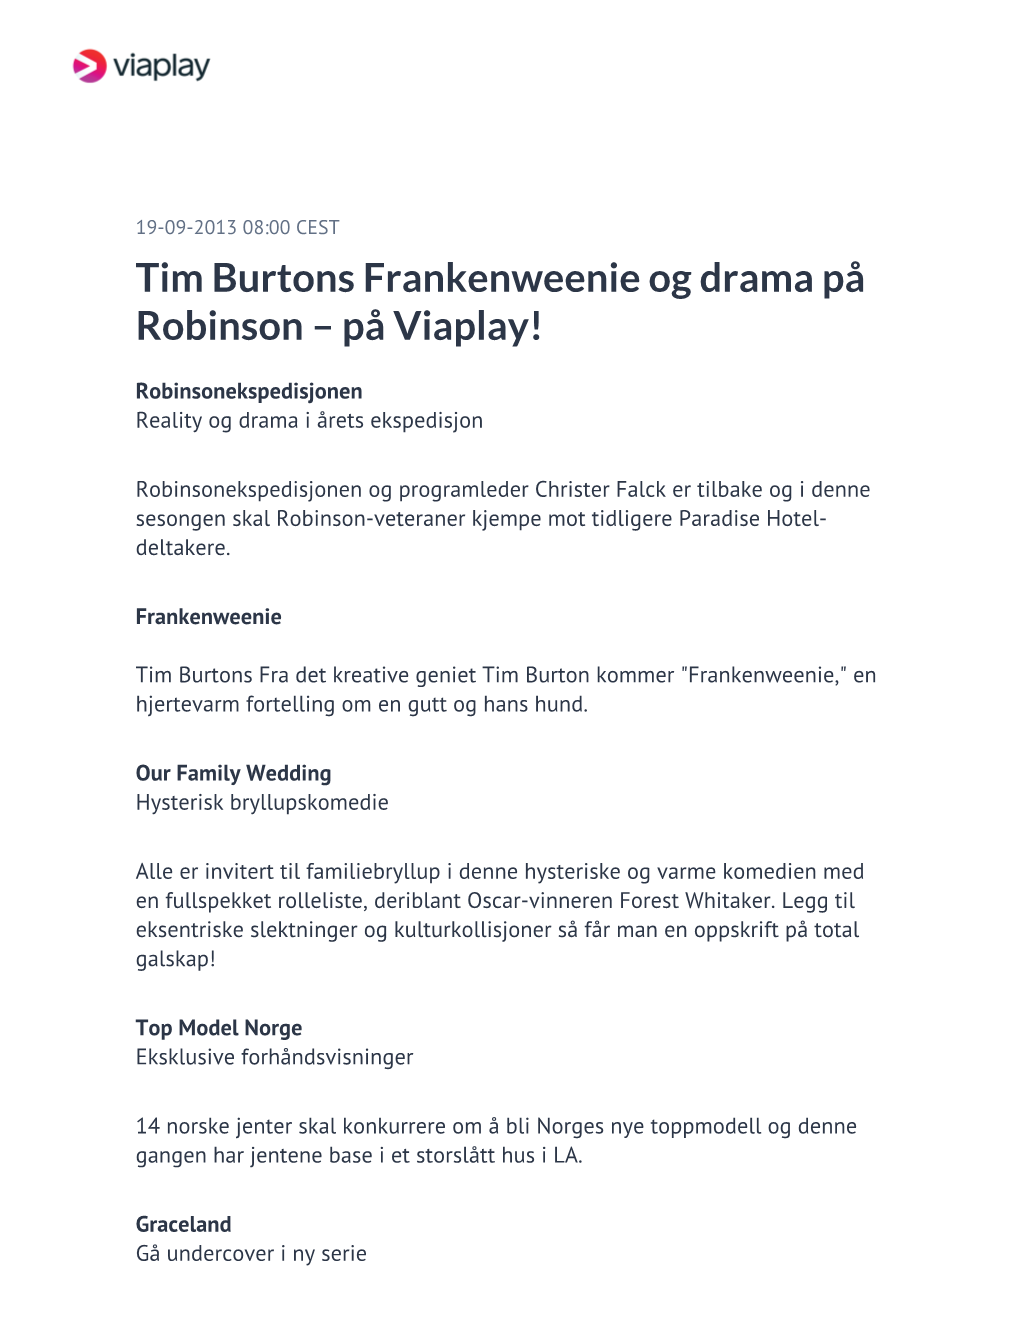 Tim Burtons Frankenweenie Og Drama På Robinson – På Viaplay!